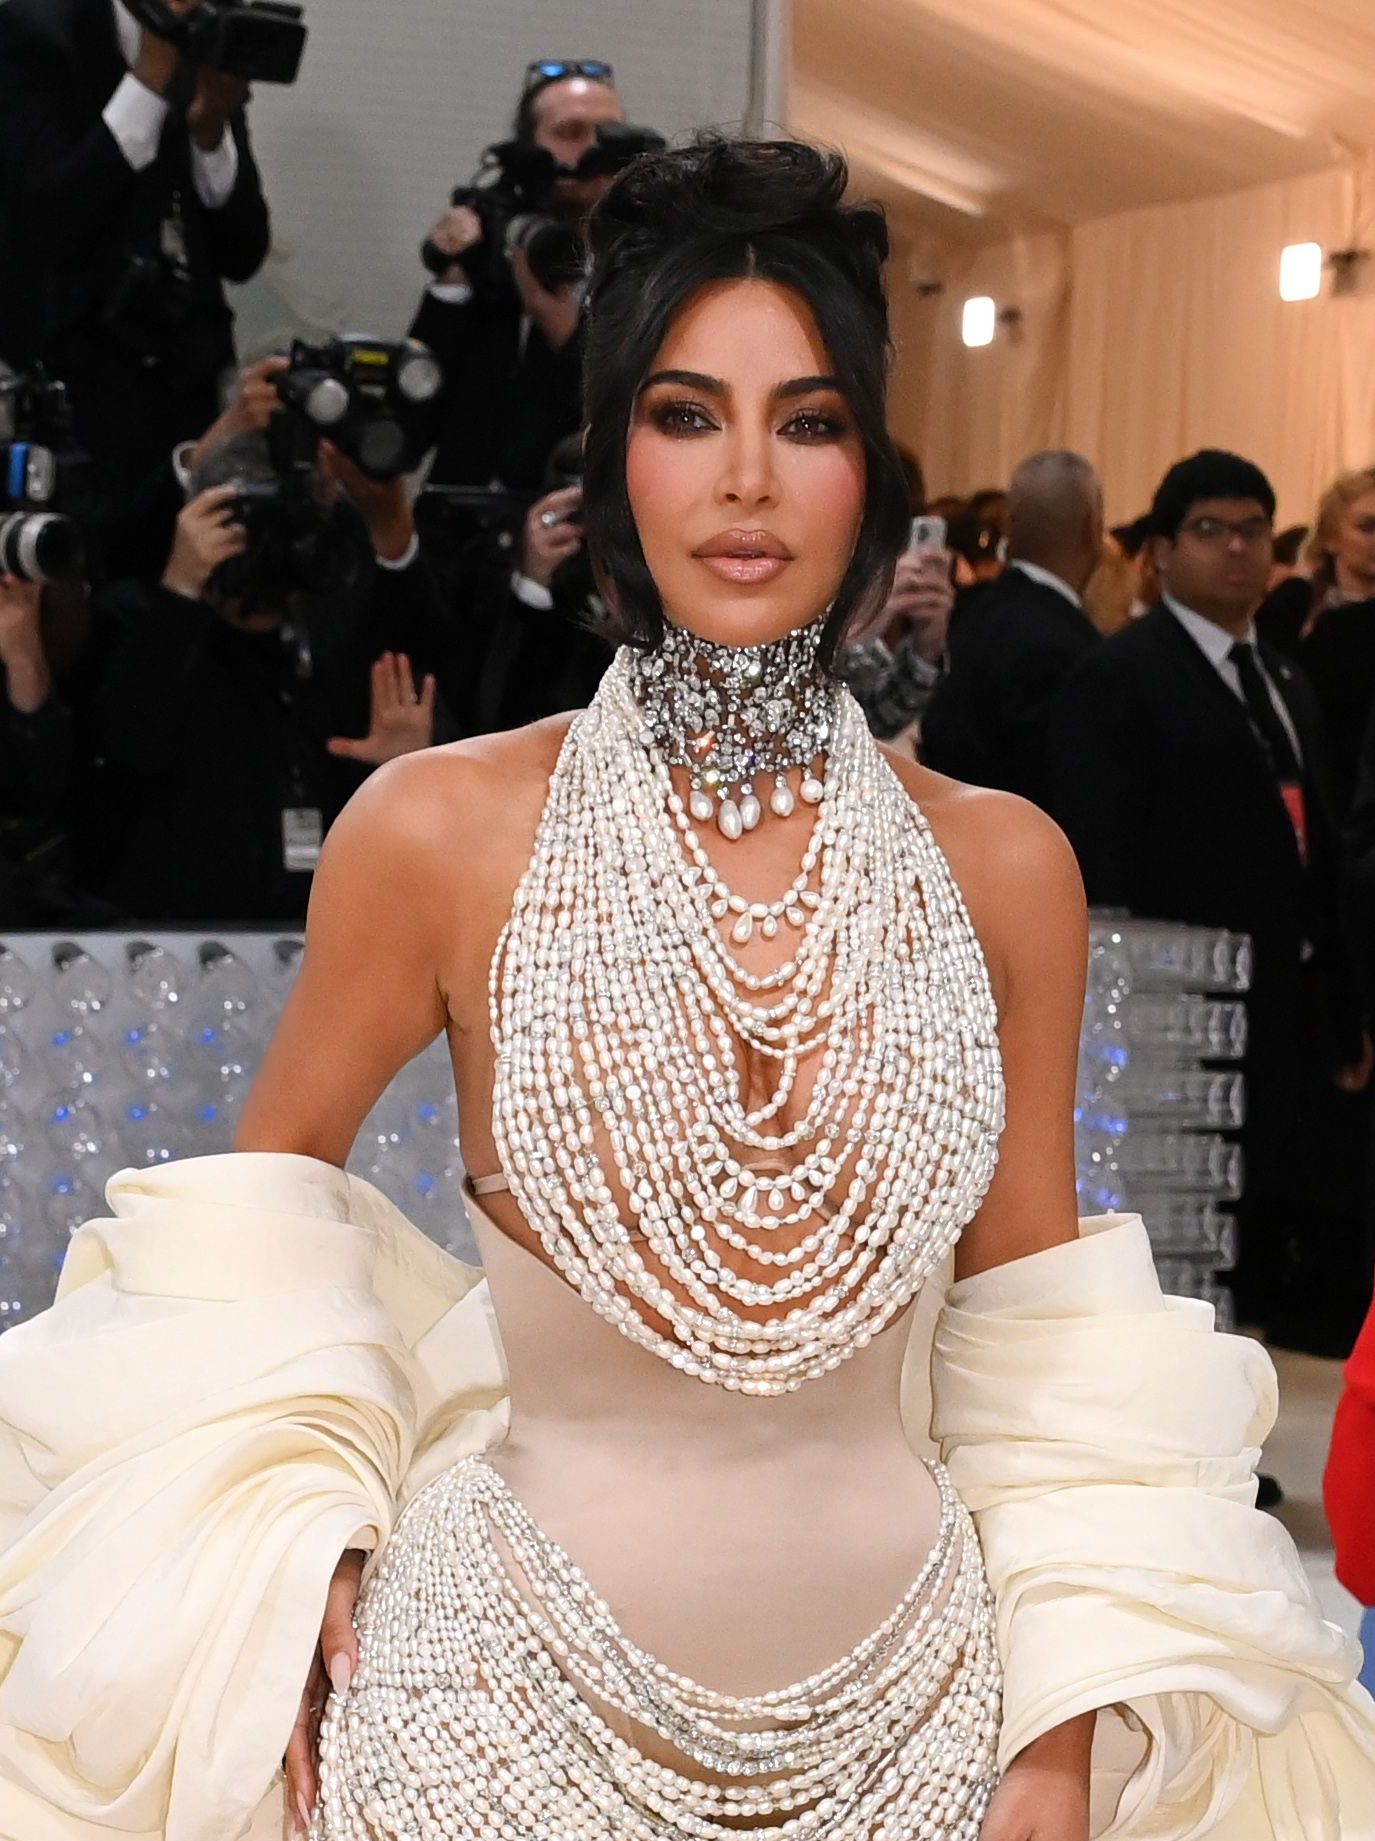 Kim Kardashian Shows Off Her Closet in New Balenciaga Campaign